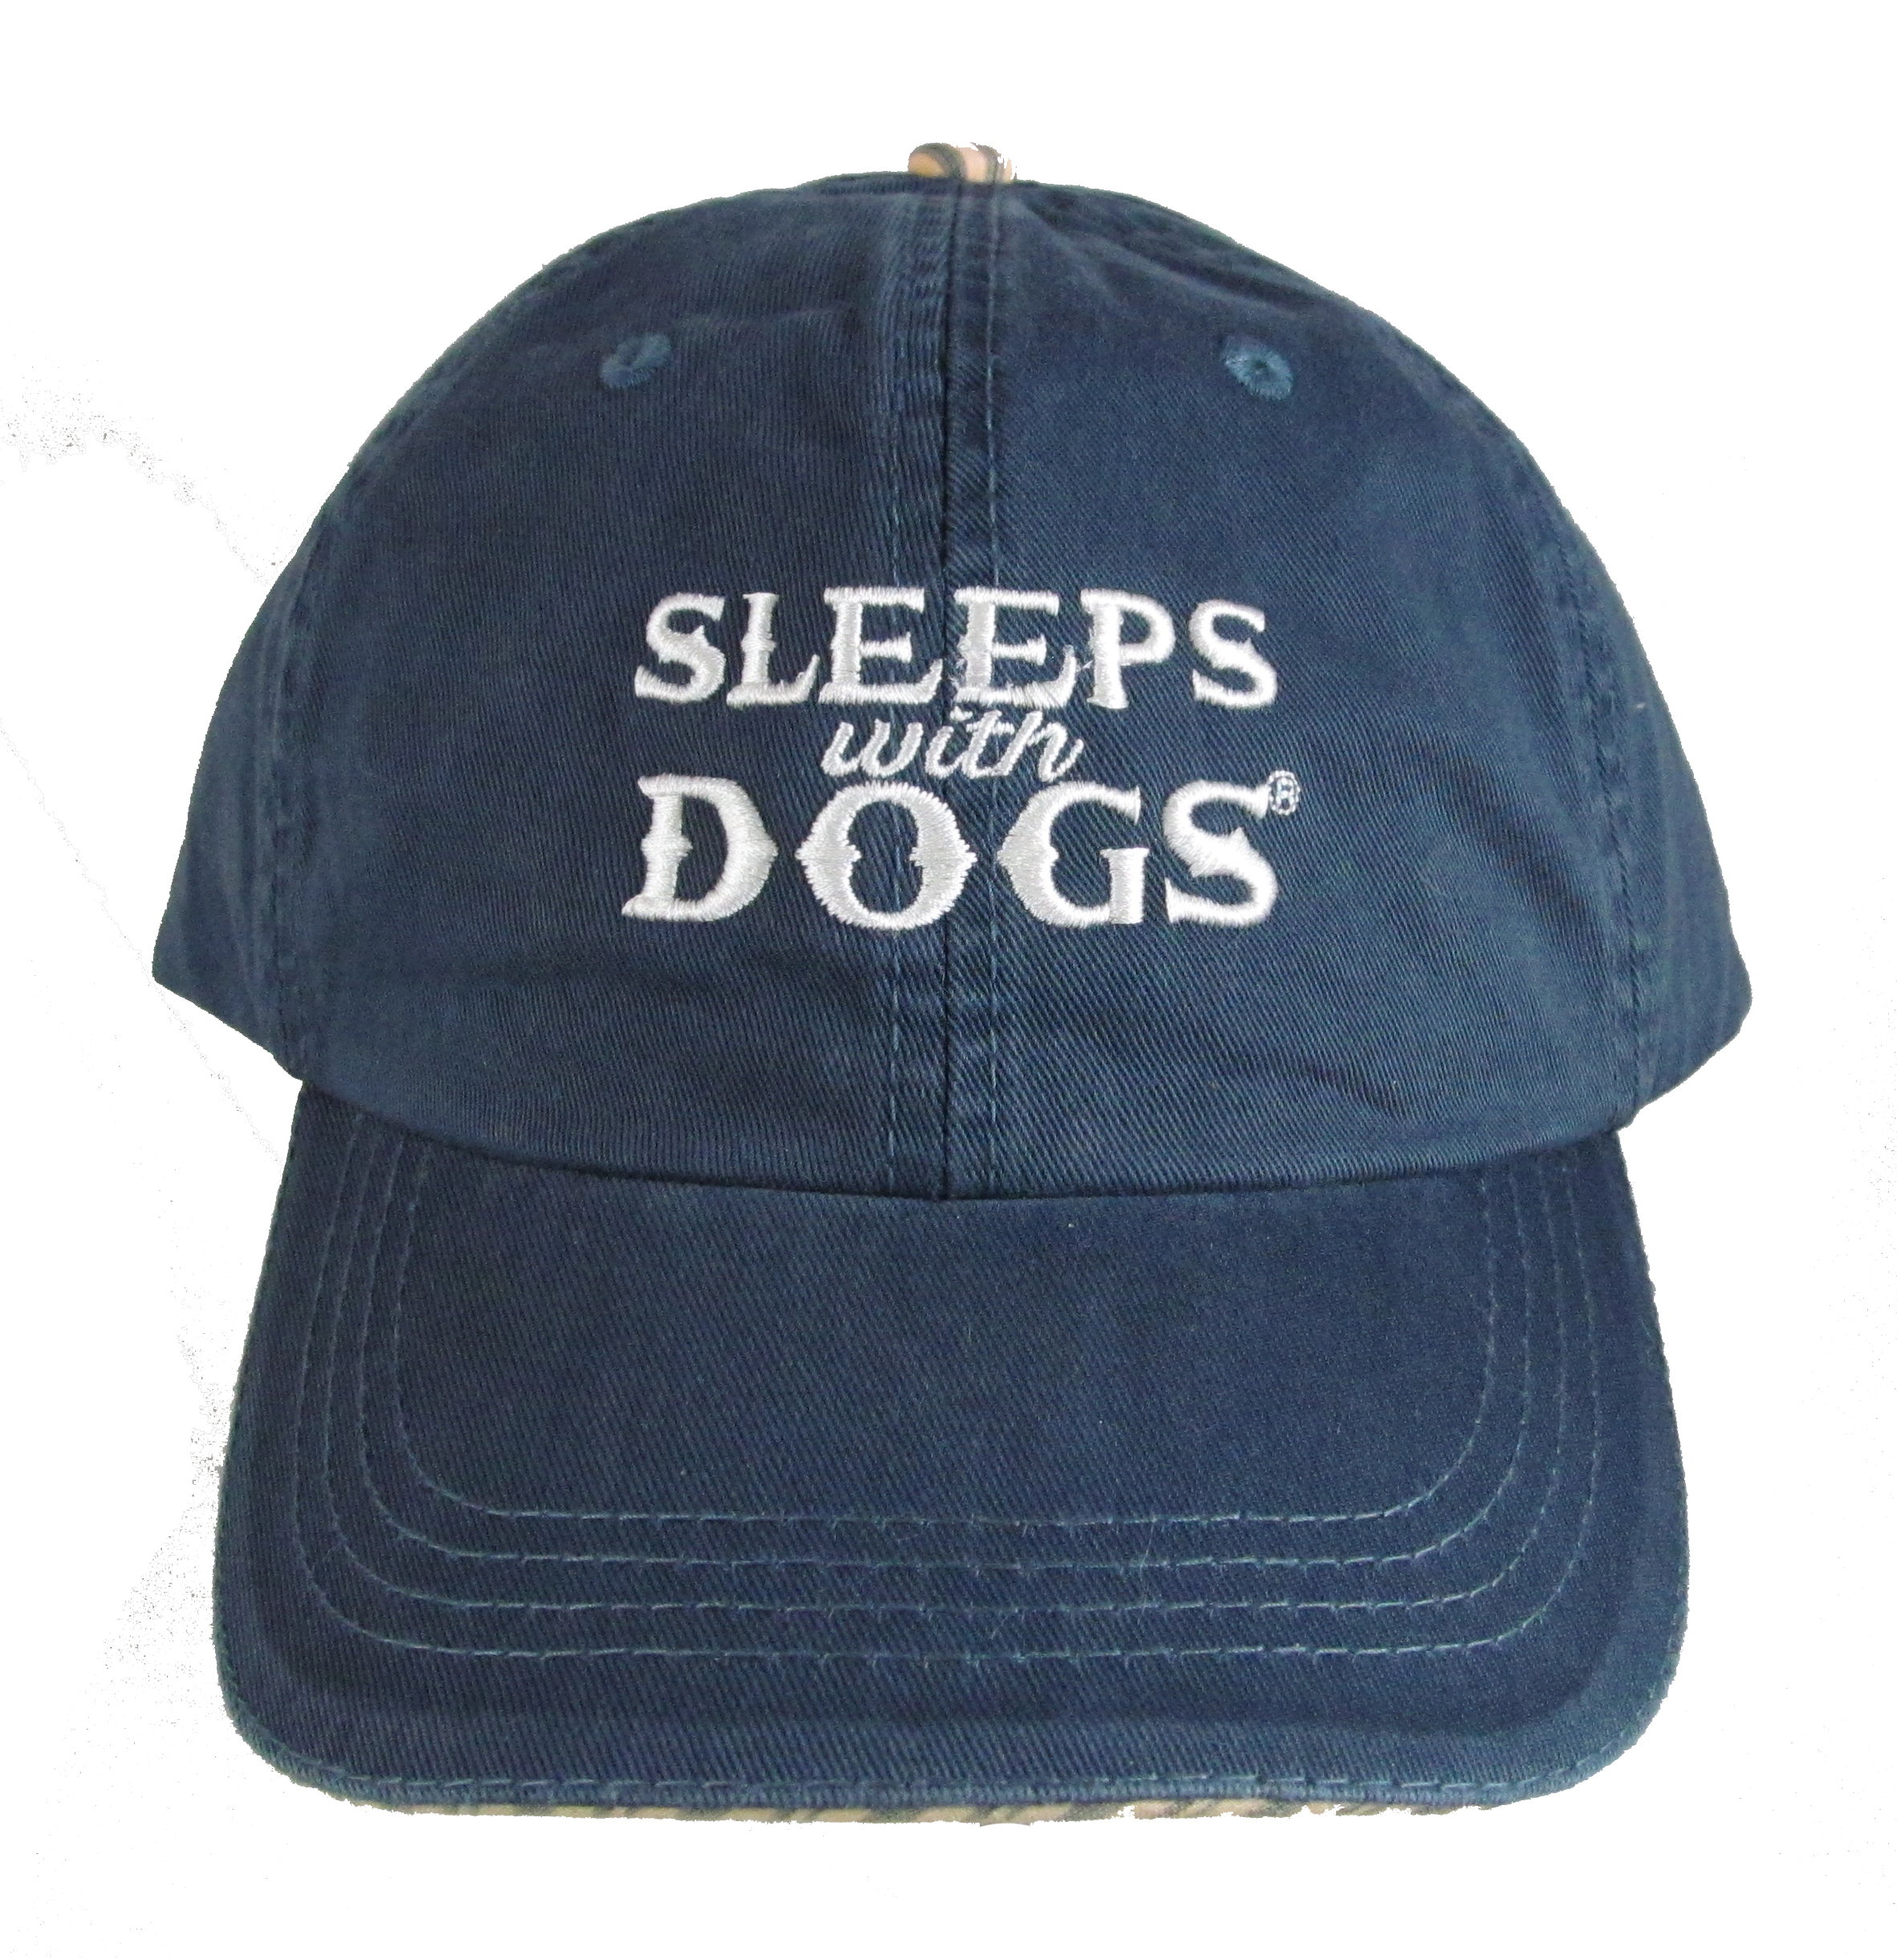 Sleeps with Dogs Baseball Hats for People